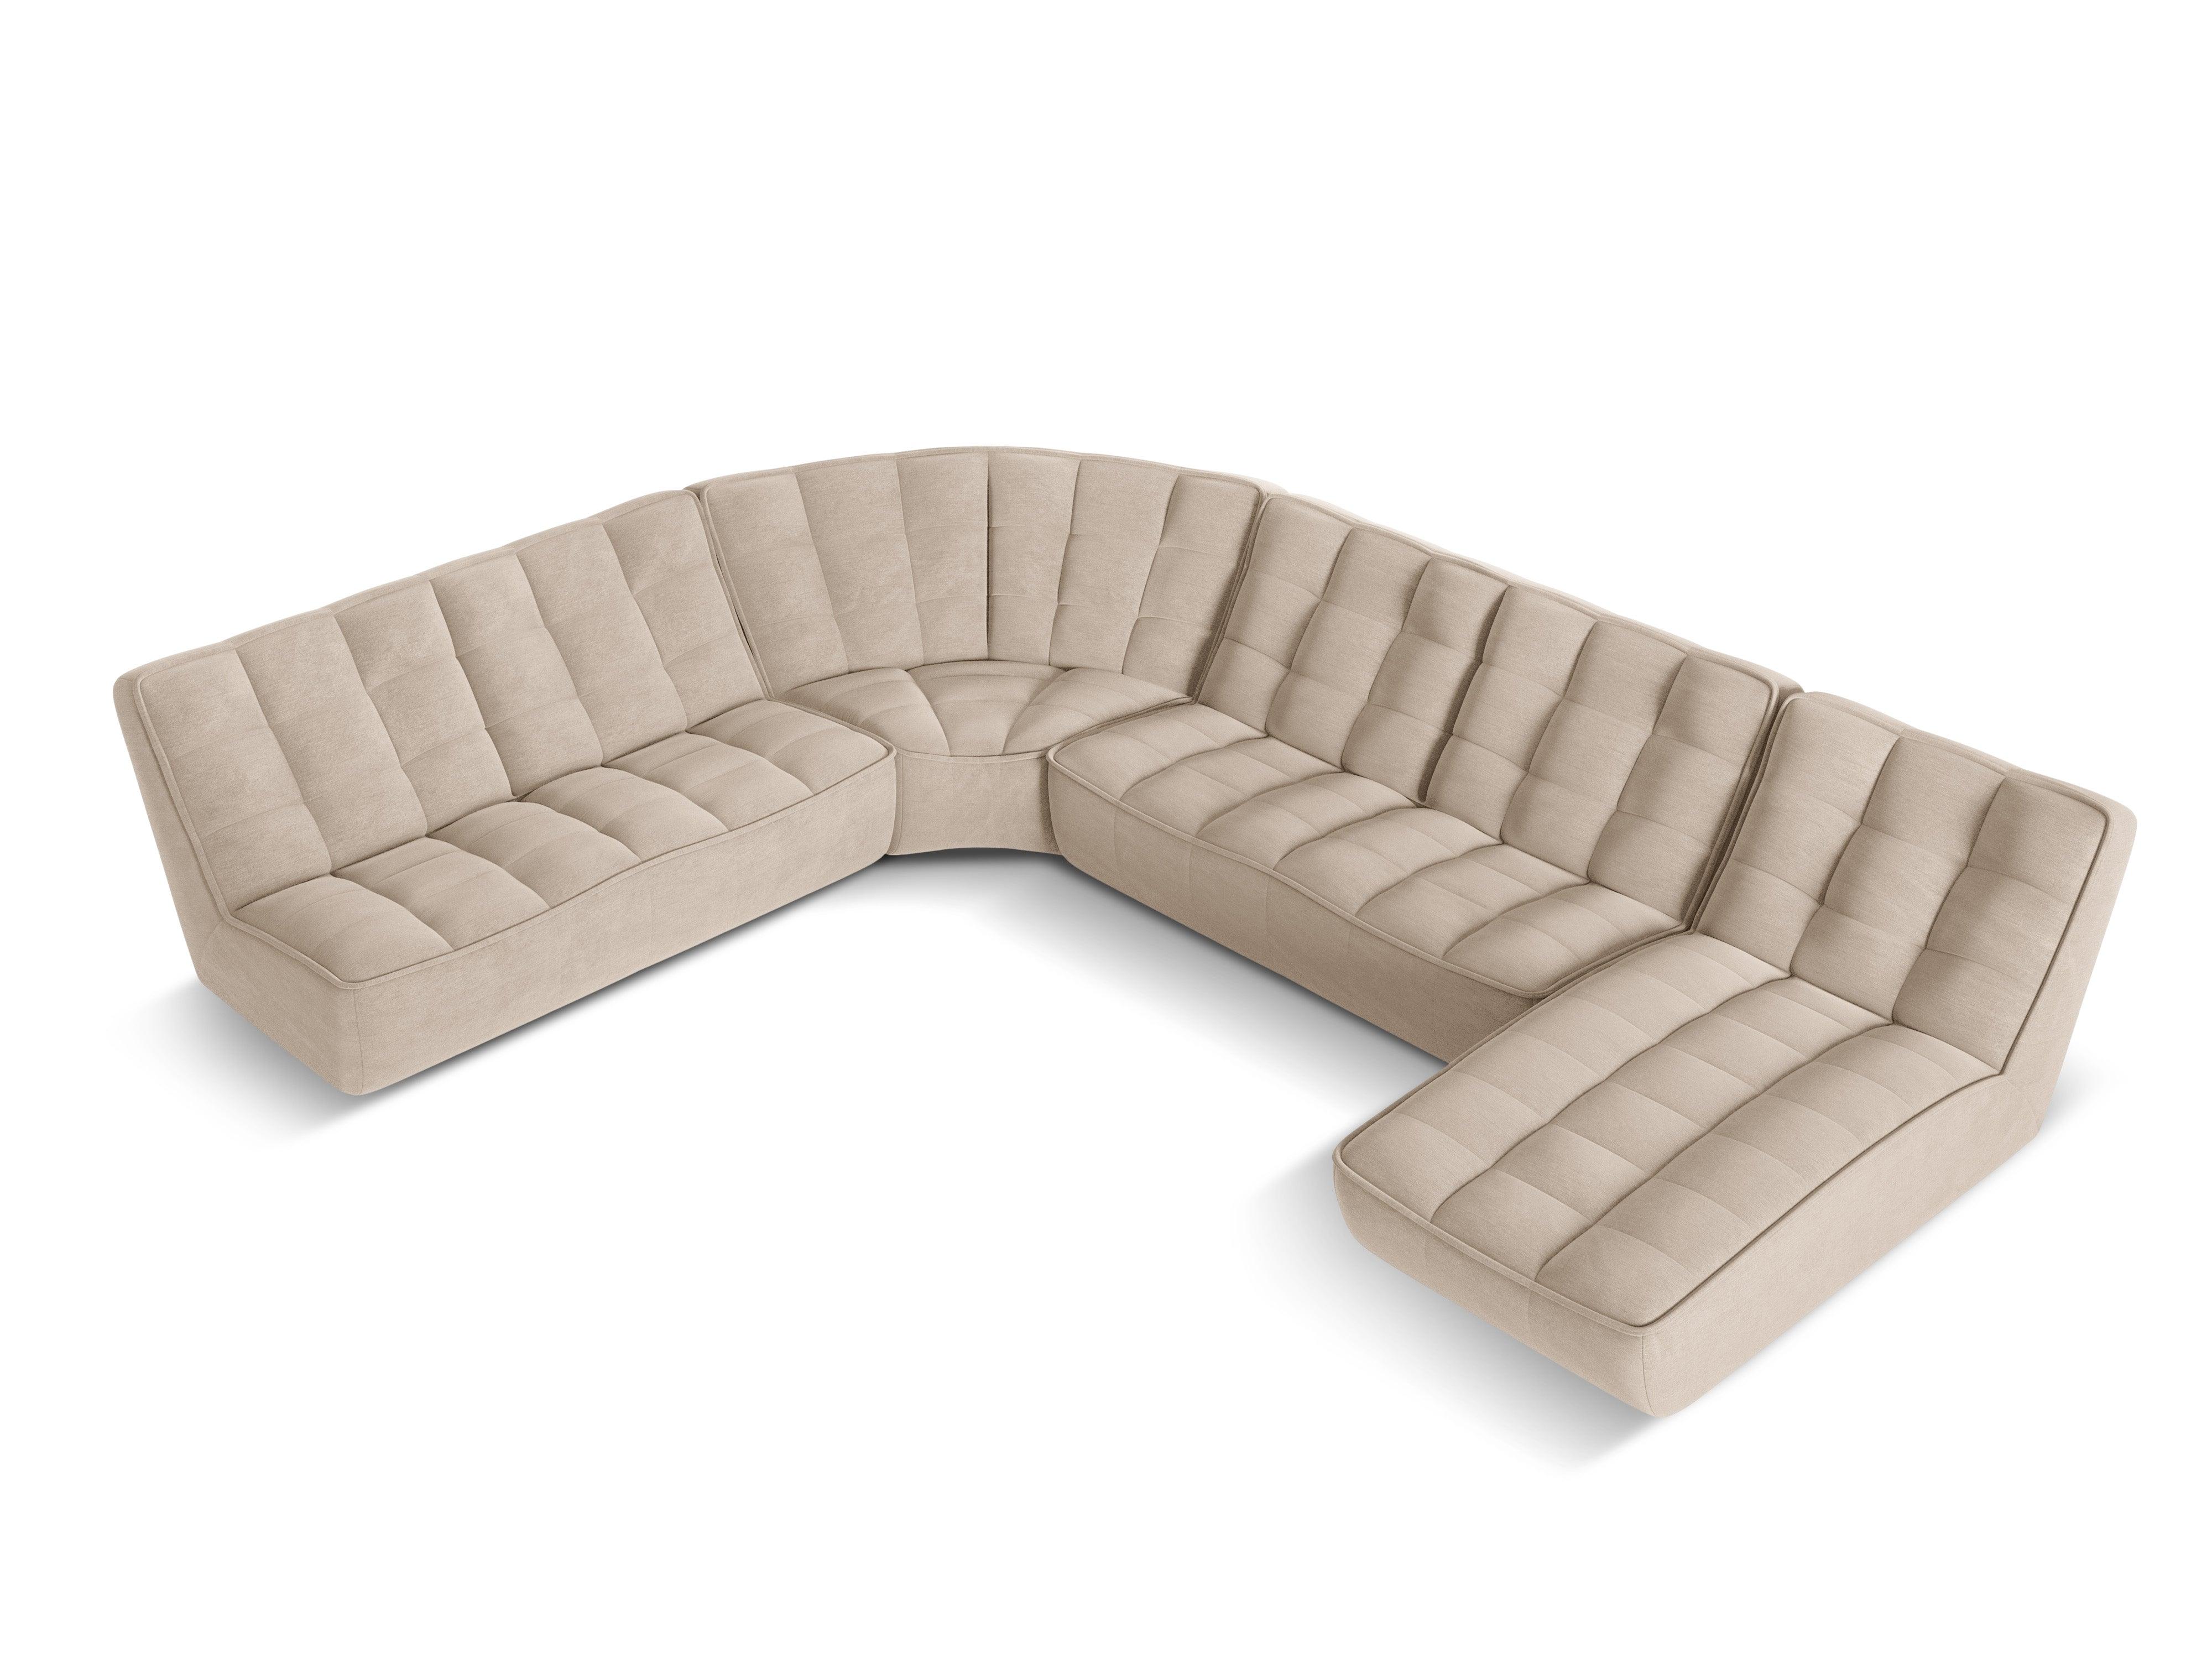 Modular Panoramic Left Corner Sofa, "Moni", 8 Seats, 367x284x91
Made in Europe, Maison Heritage, Eye on Design